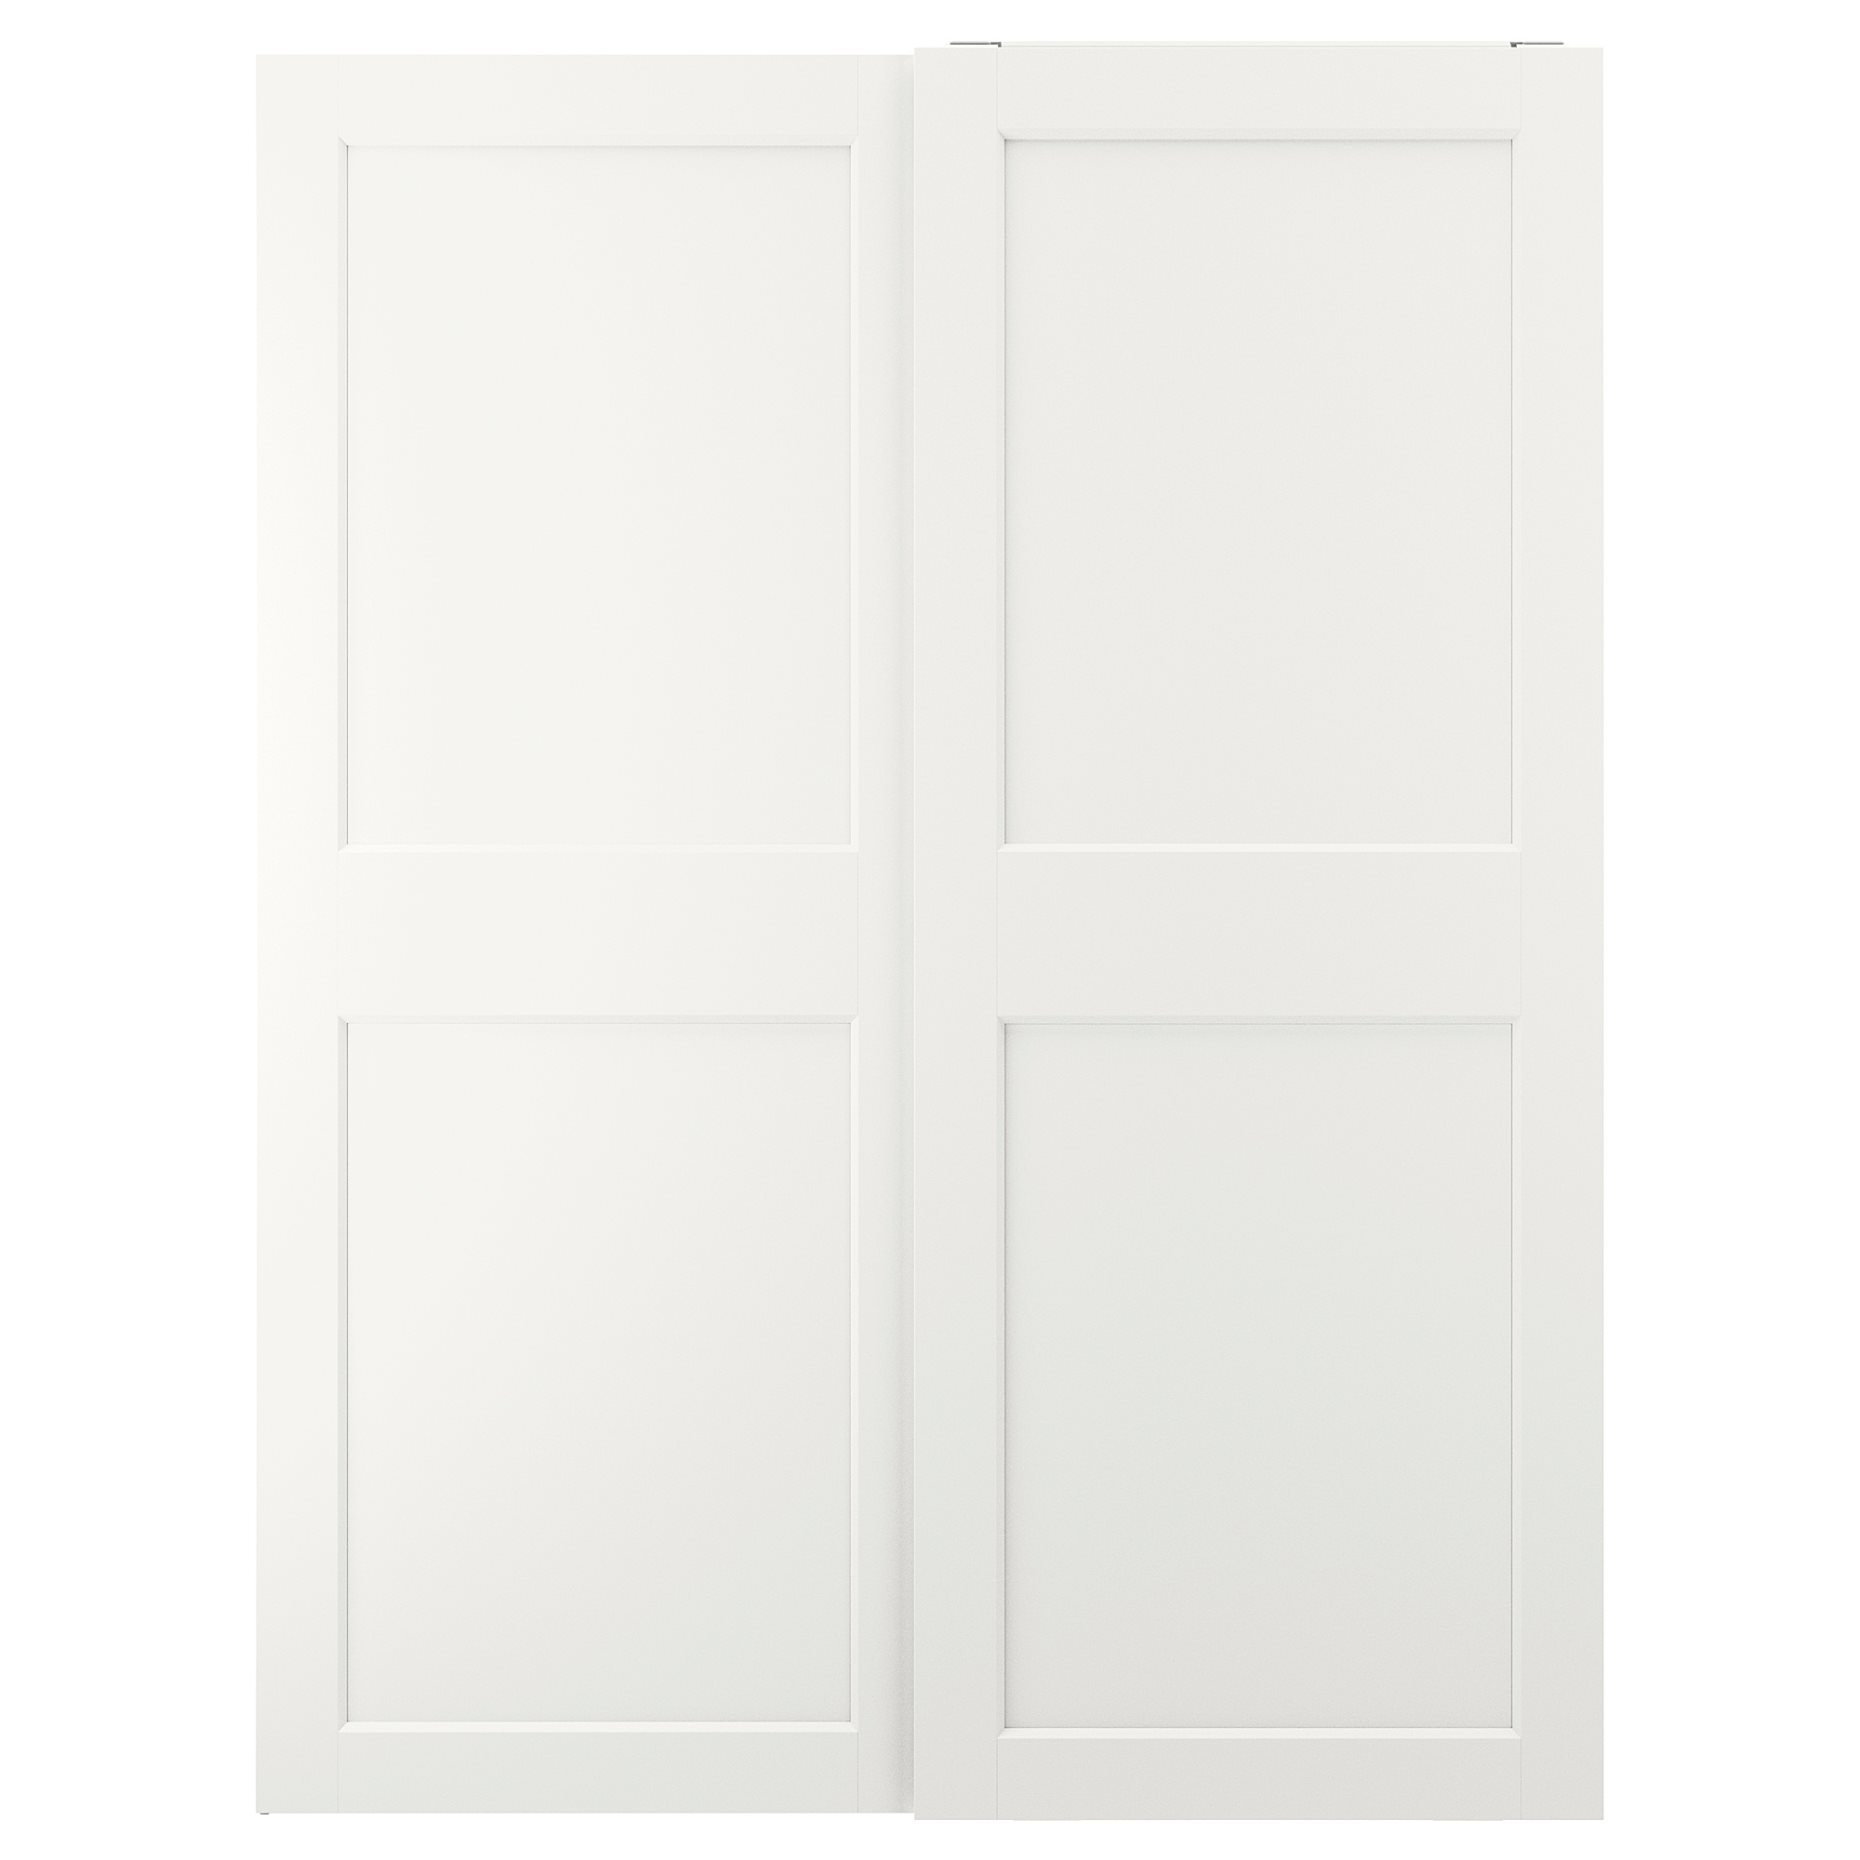 GRIMO, pair of sliding doors, 150x201 cm, 205.215.27